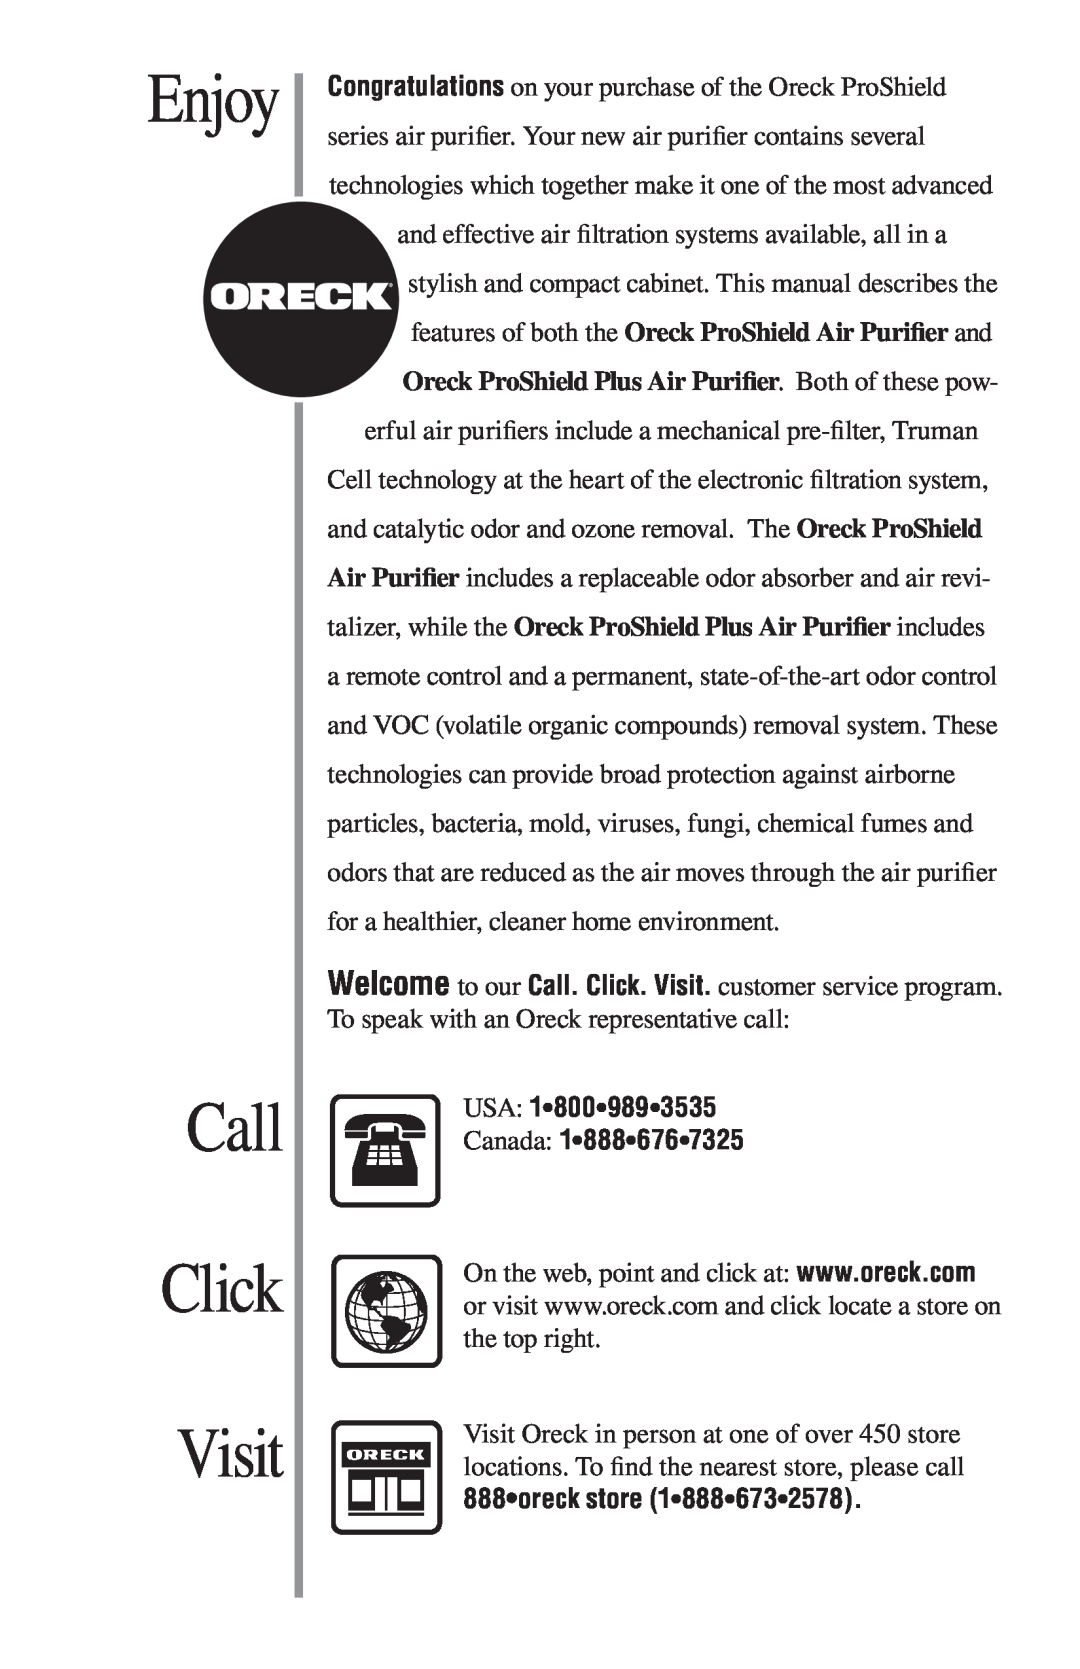 Oreck ProShield Air Purifier manual Call, Enjoy, Click Visit, USA 18009893535 Canada, oreck store 